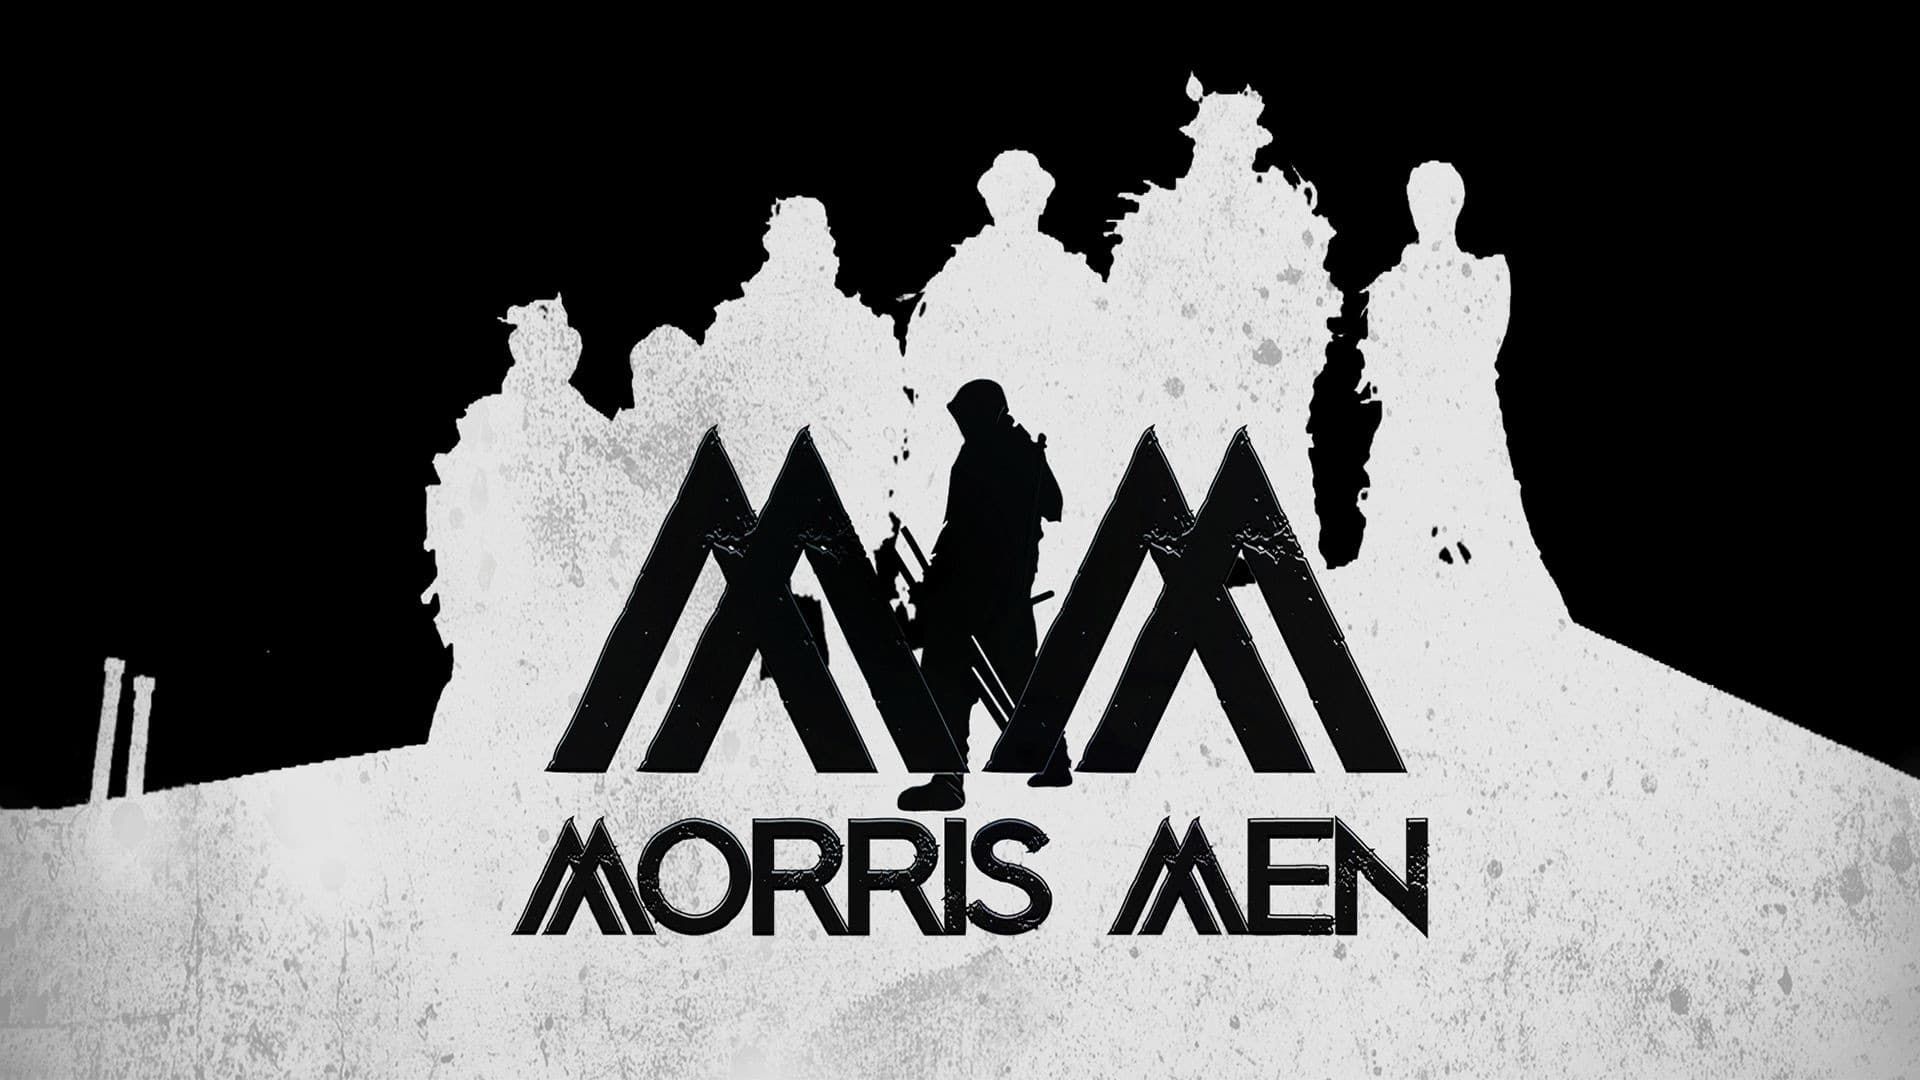 Morris Men background